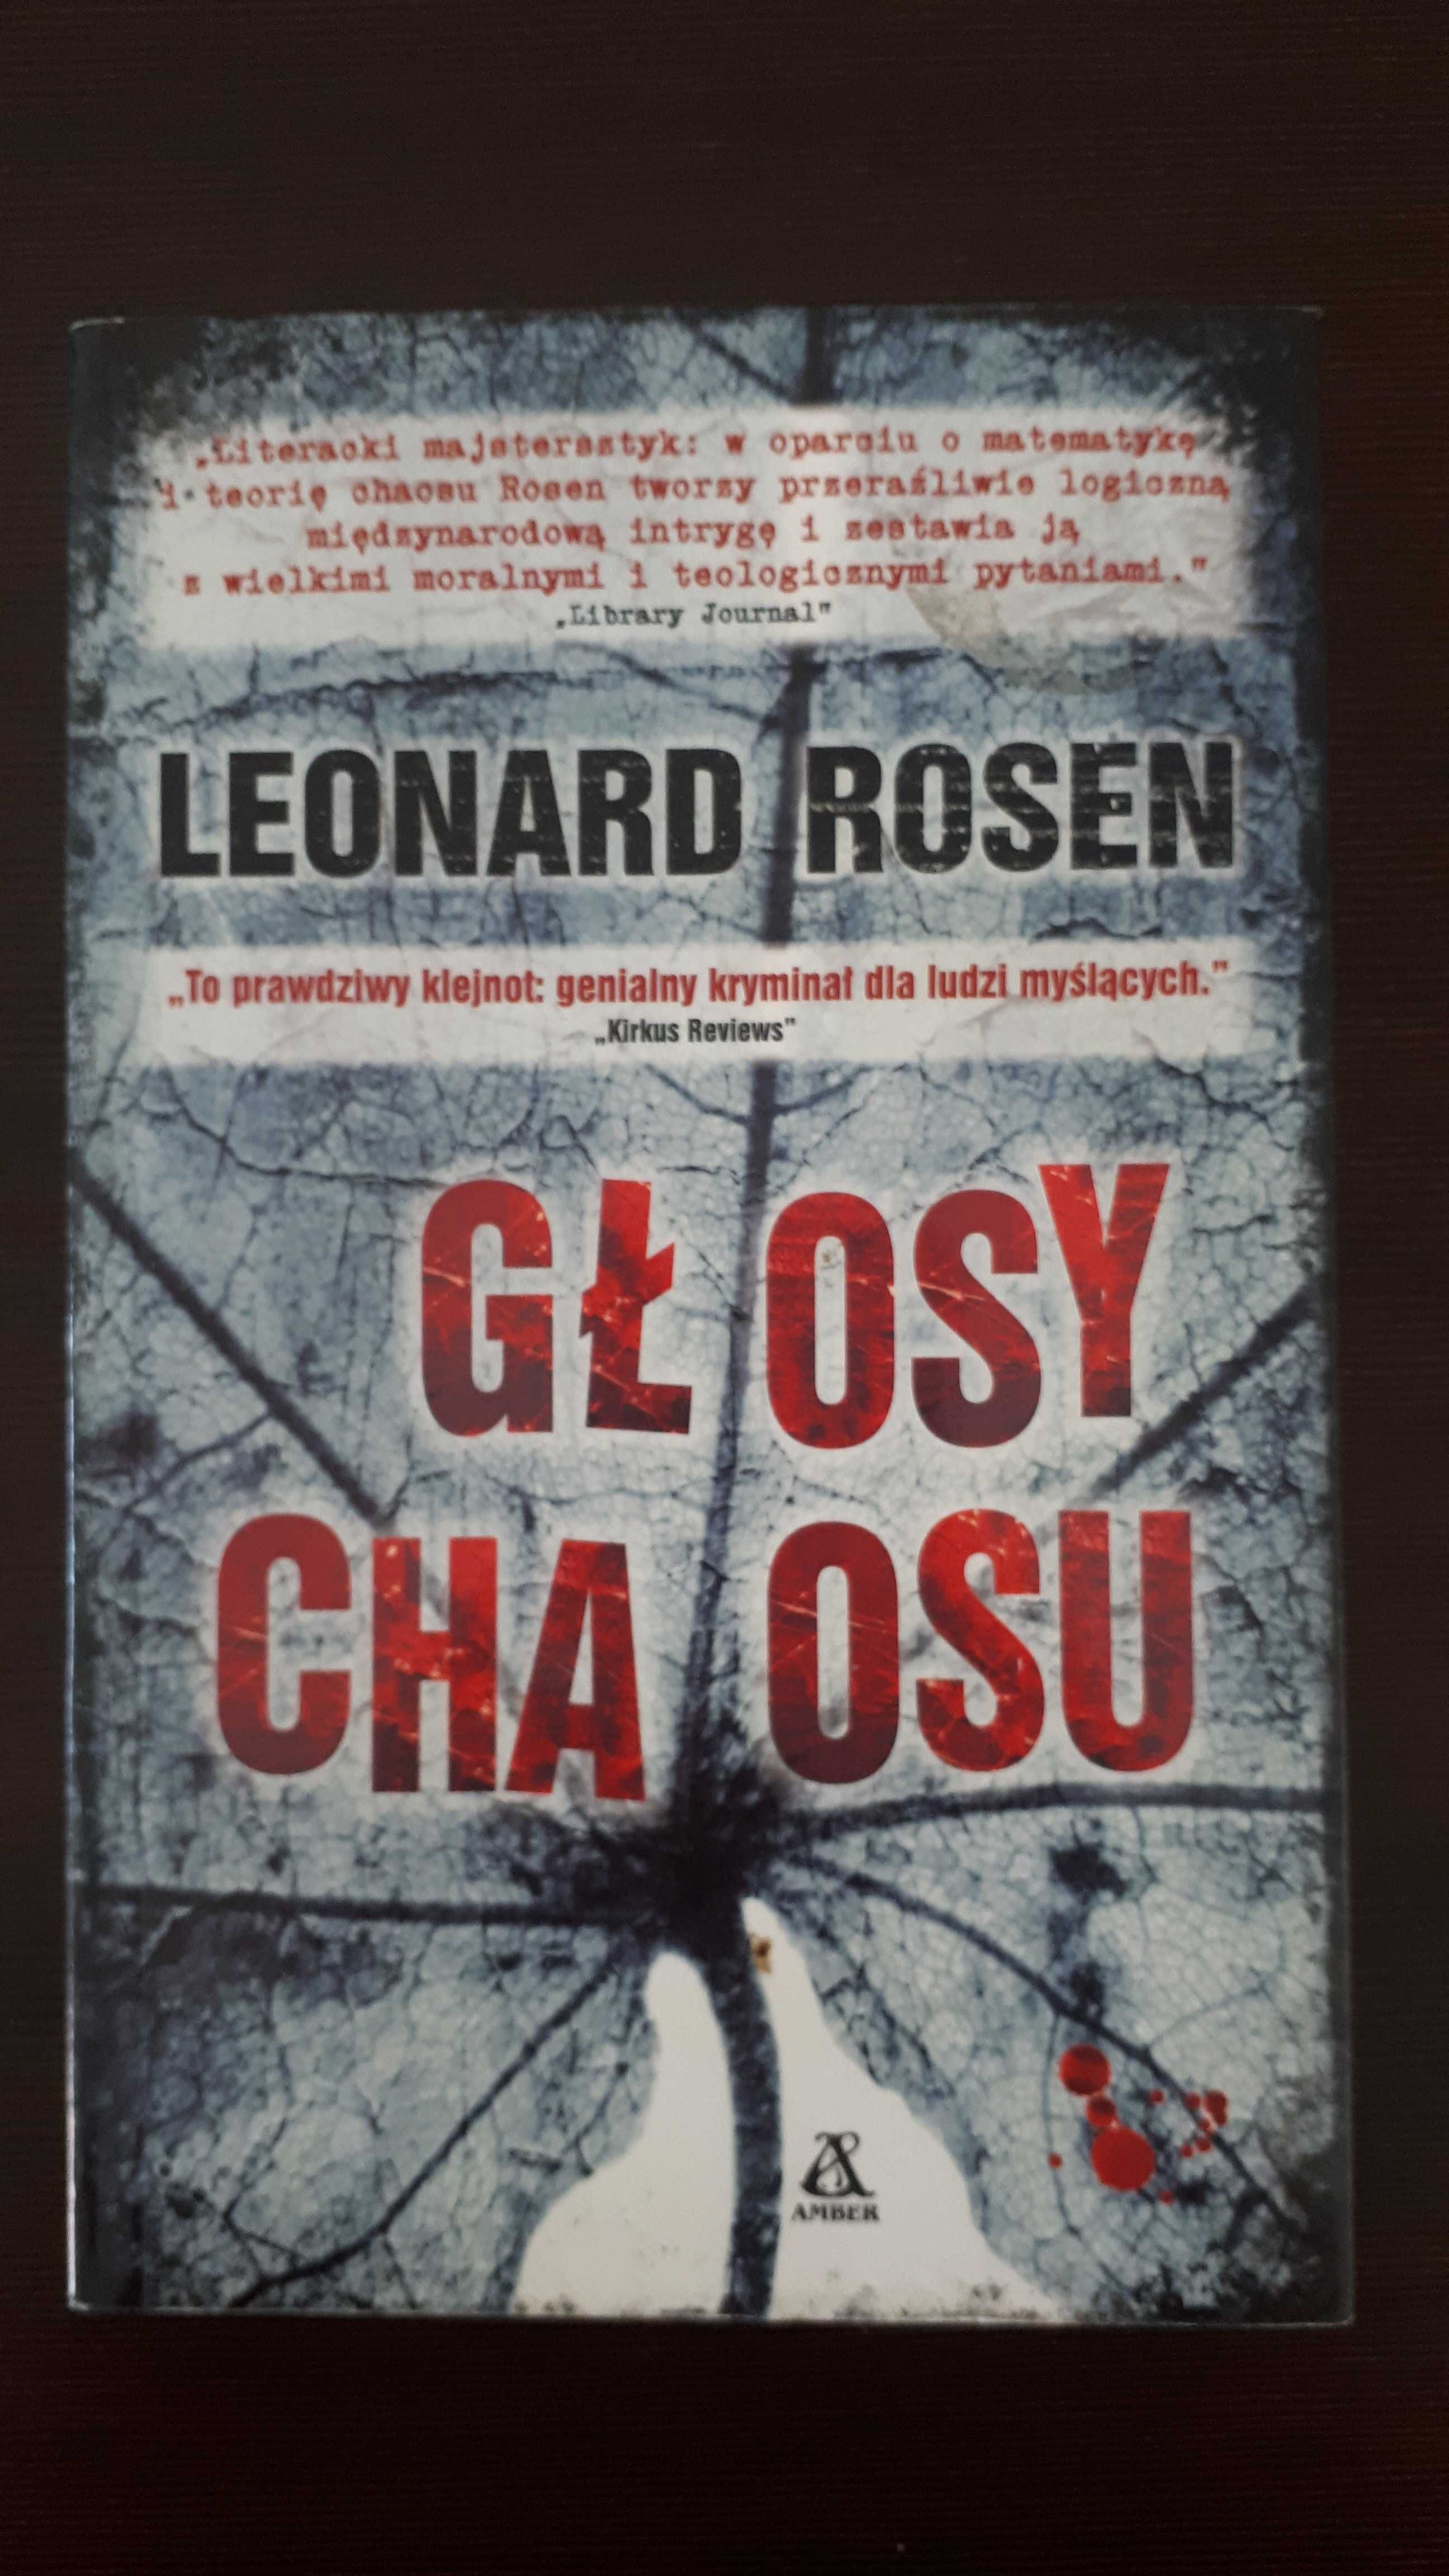 Książka "Głosy chaosu" Leonard Rosen